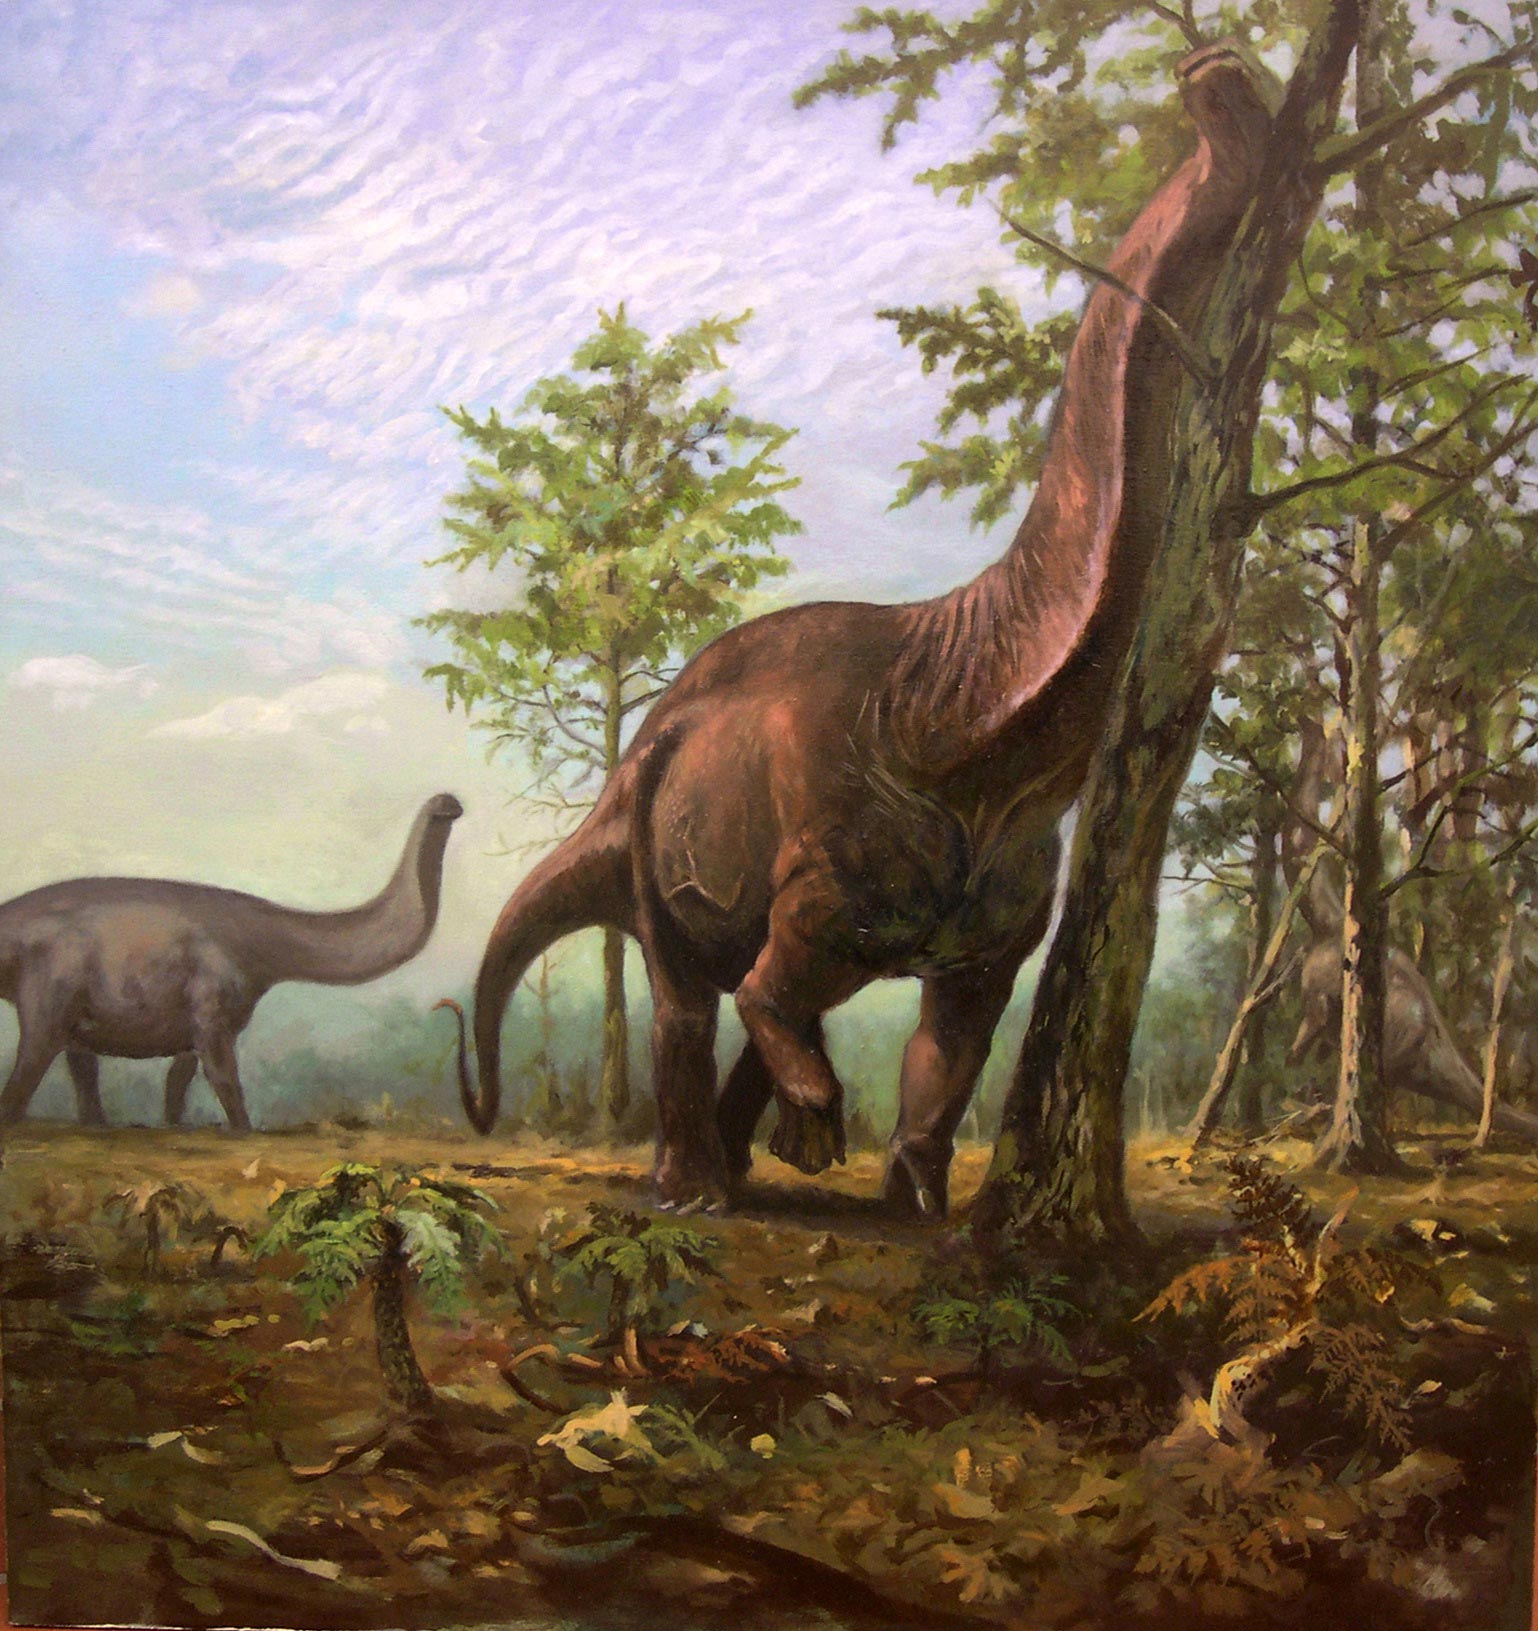 https://scitechdaily.com/images/Brontosaurus-Warm-Vegetated-Landscape.jpg